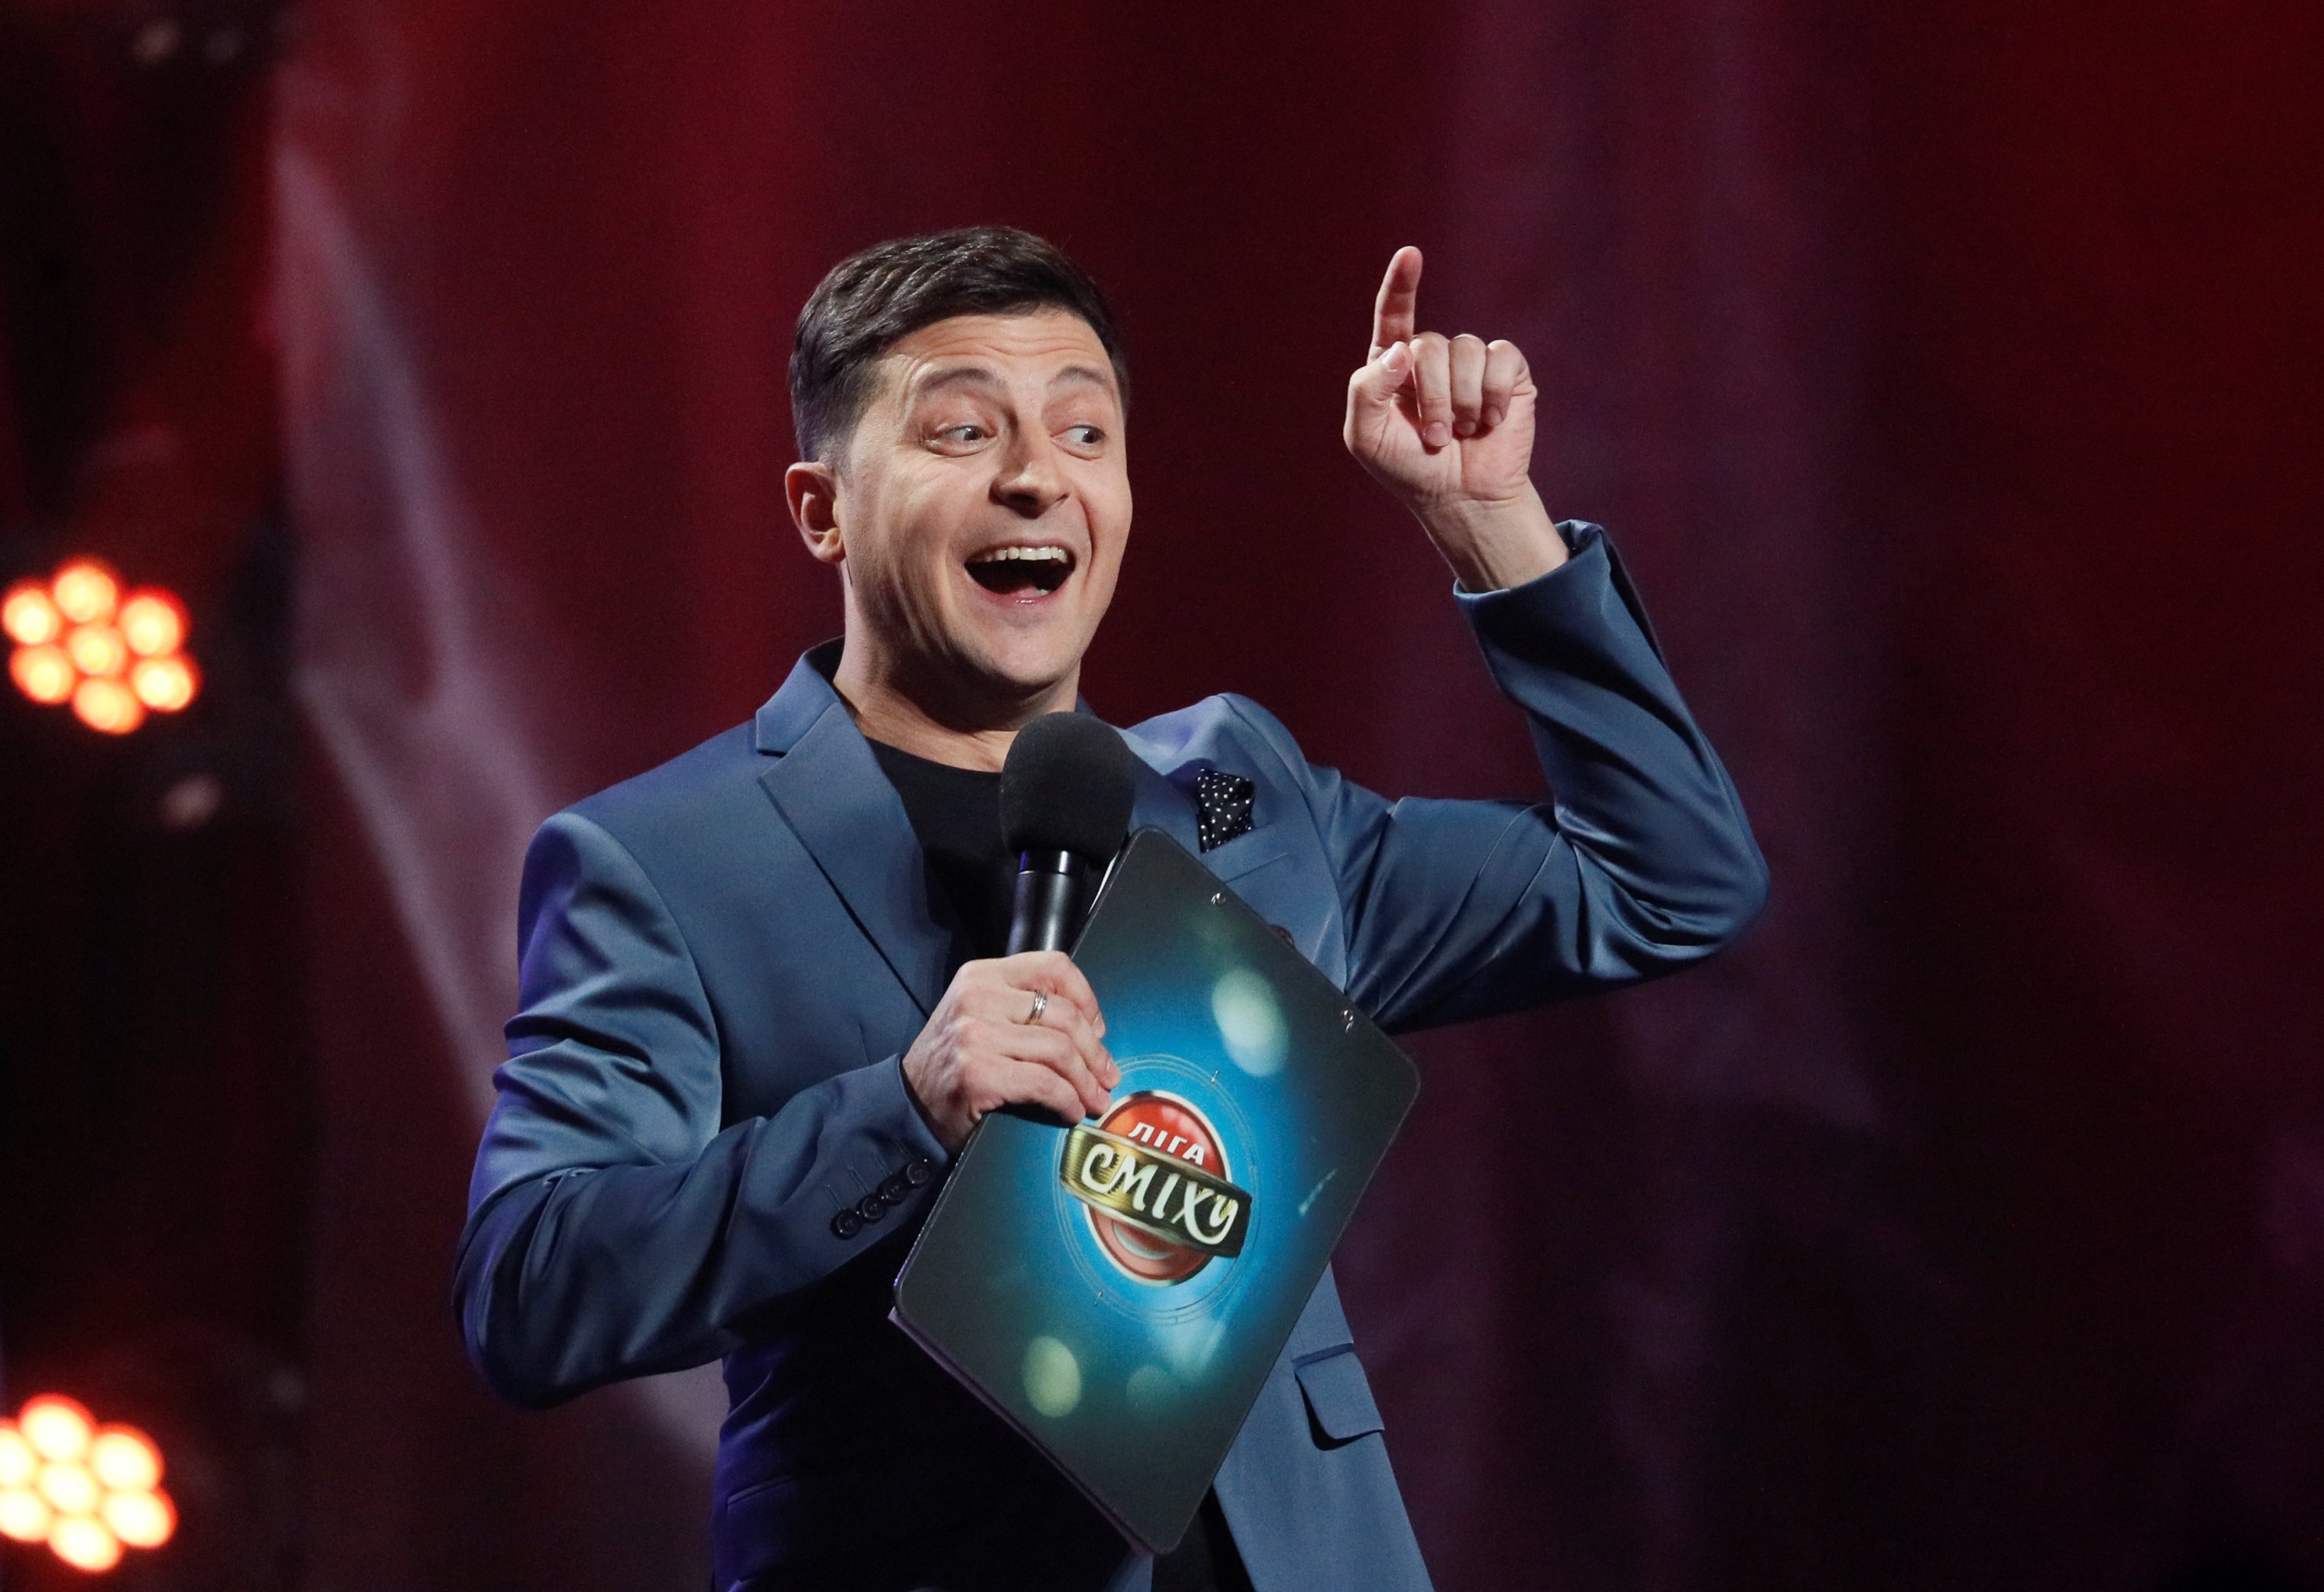 Volodymyr Zelenskyy membawakan acara komedi di aula konser di Kiev, Ukraina, 22 Februari 2019. (REUTERS)